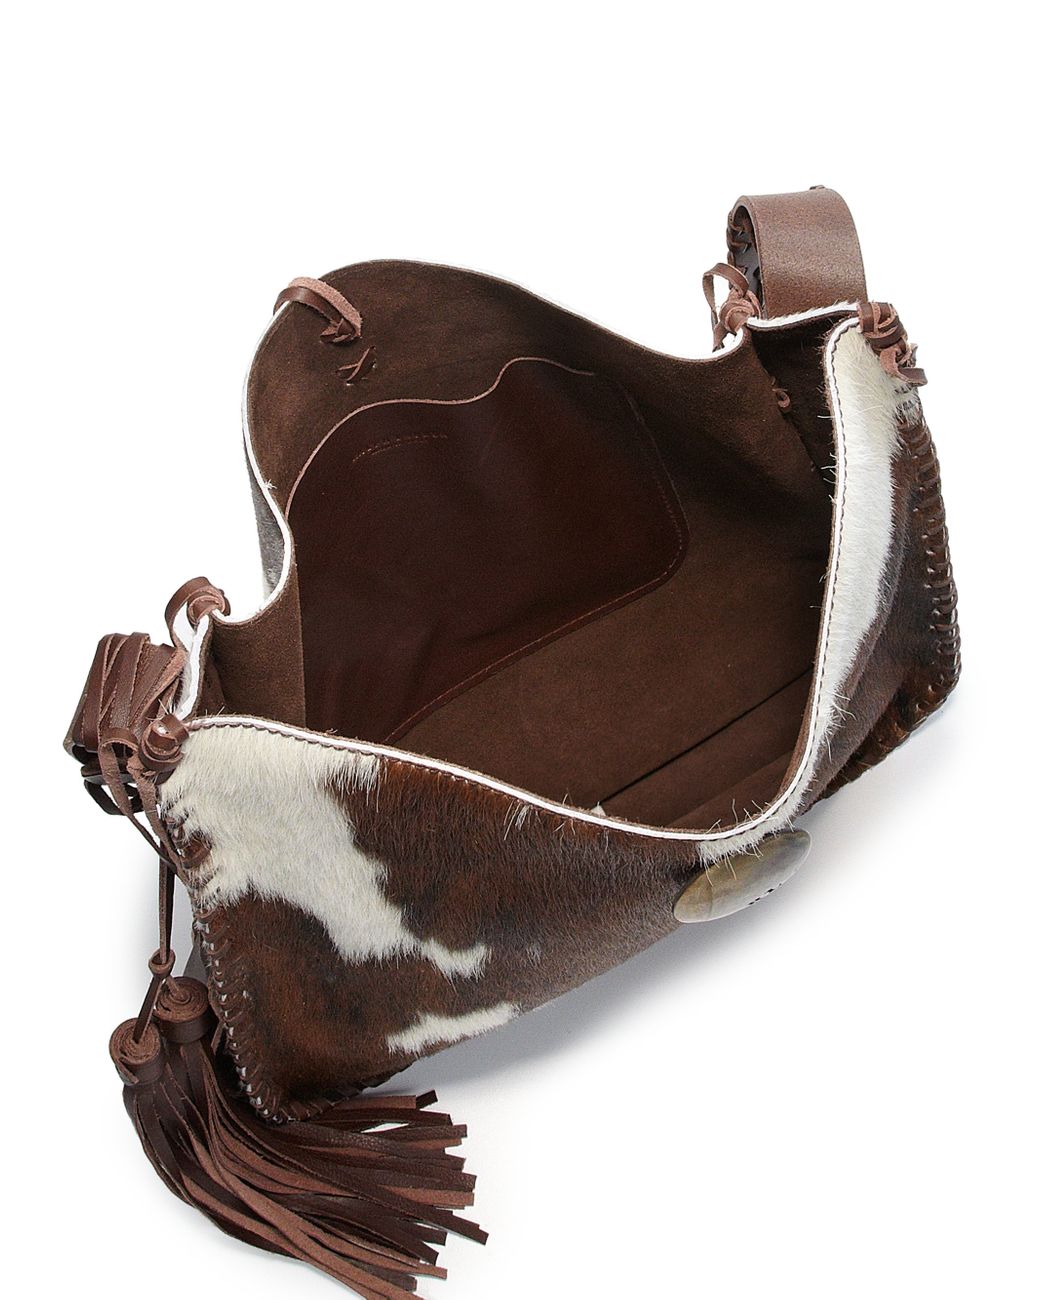 Ralph Lauren Black Hobo Handbag w/ Braided Leather Strap